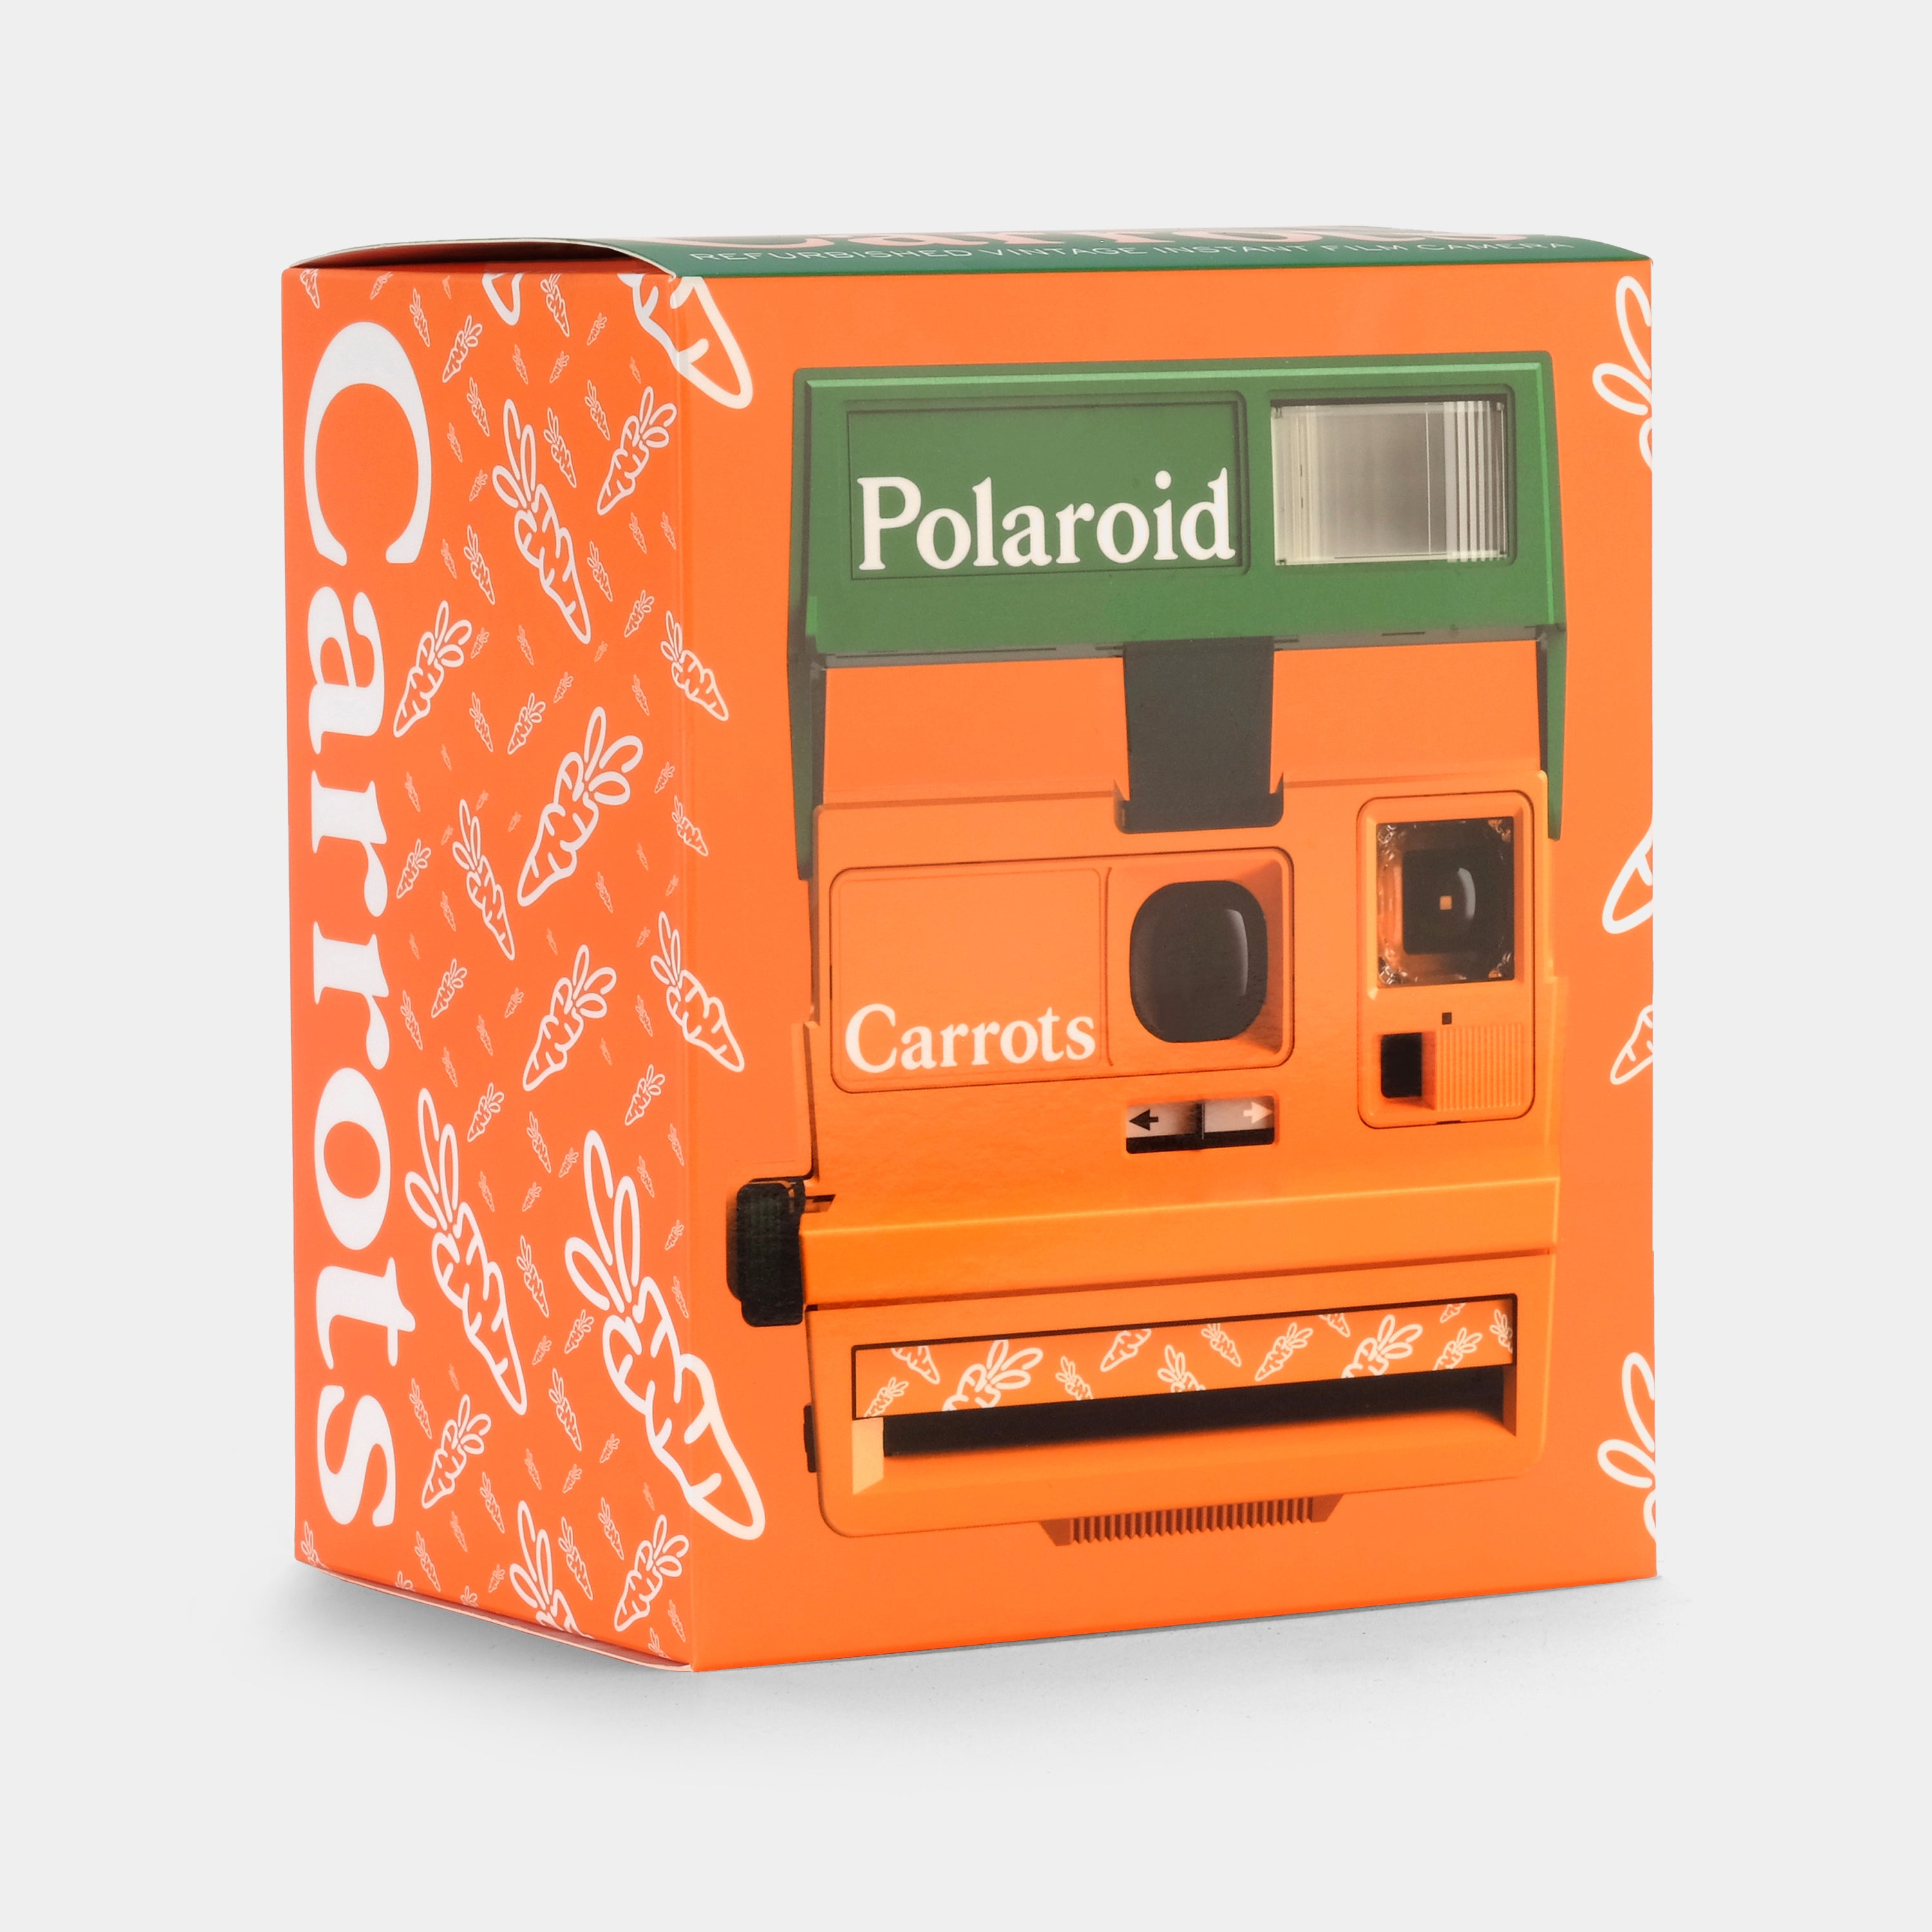 Polaroid 600 Carrots by Anwar Carrots Instant Film Camera